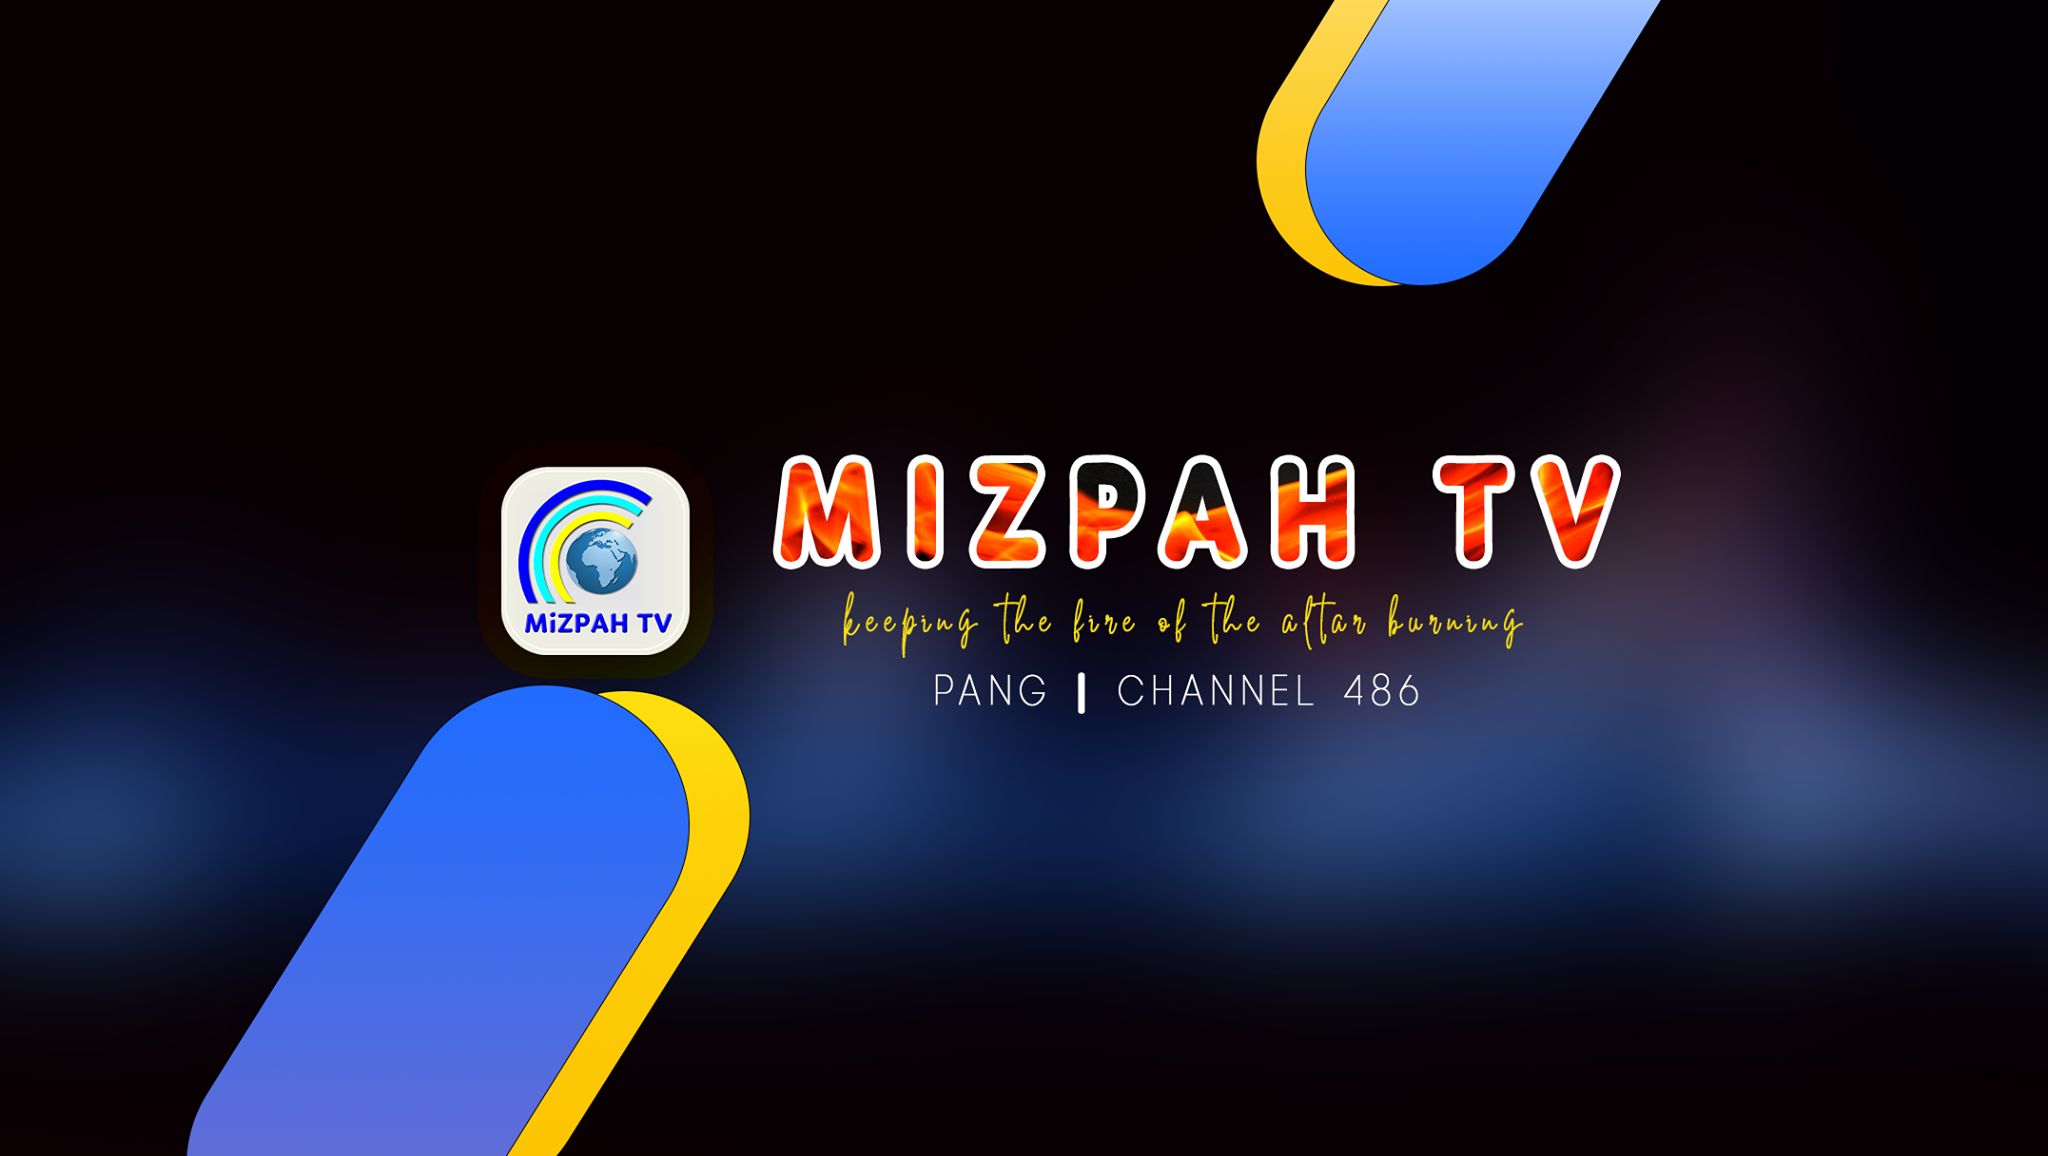 Mizpah TV Live